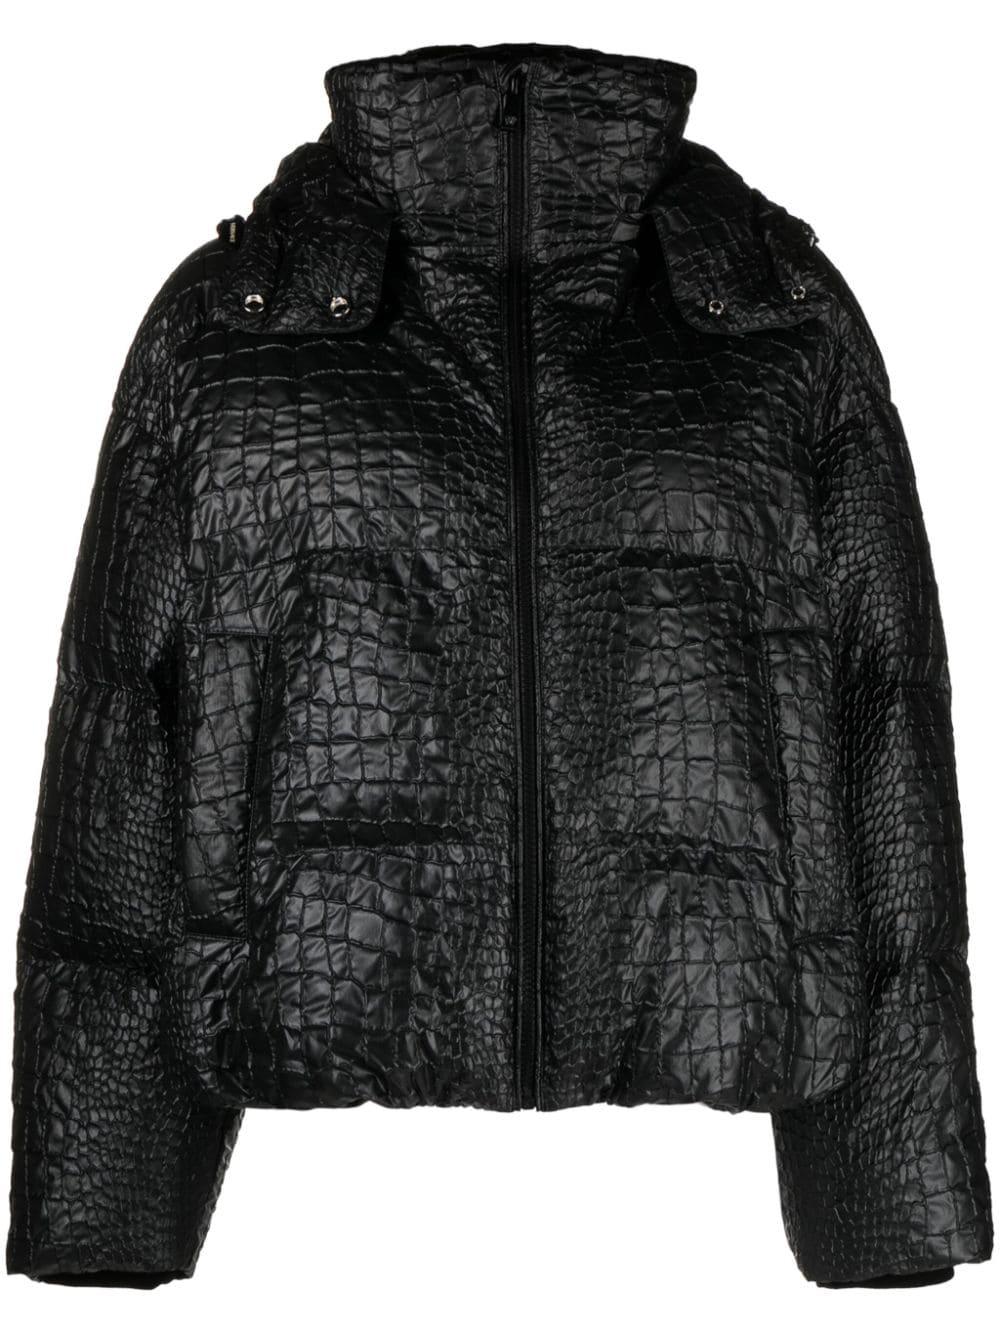 Versace Embossed Crocodile-effect Leather Jacket in Brown for Men